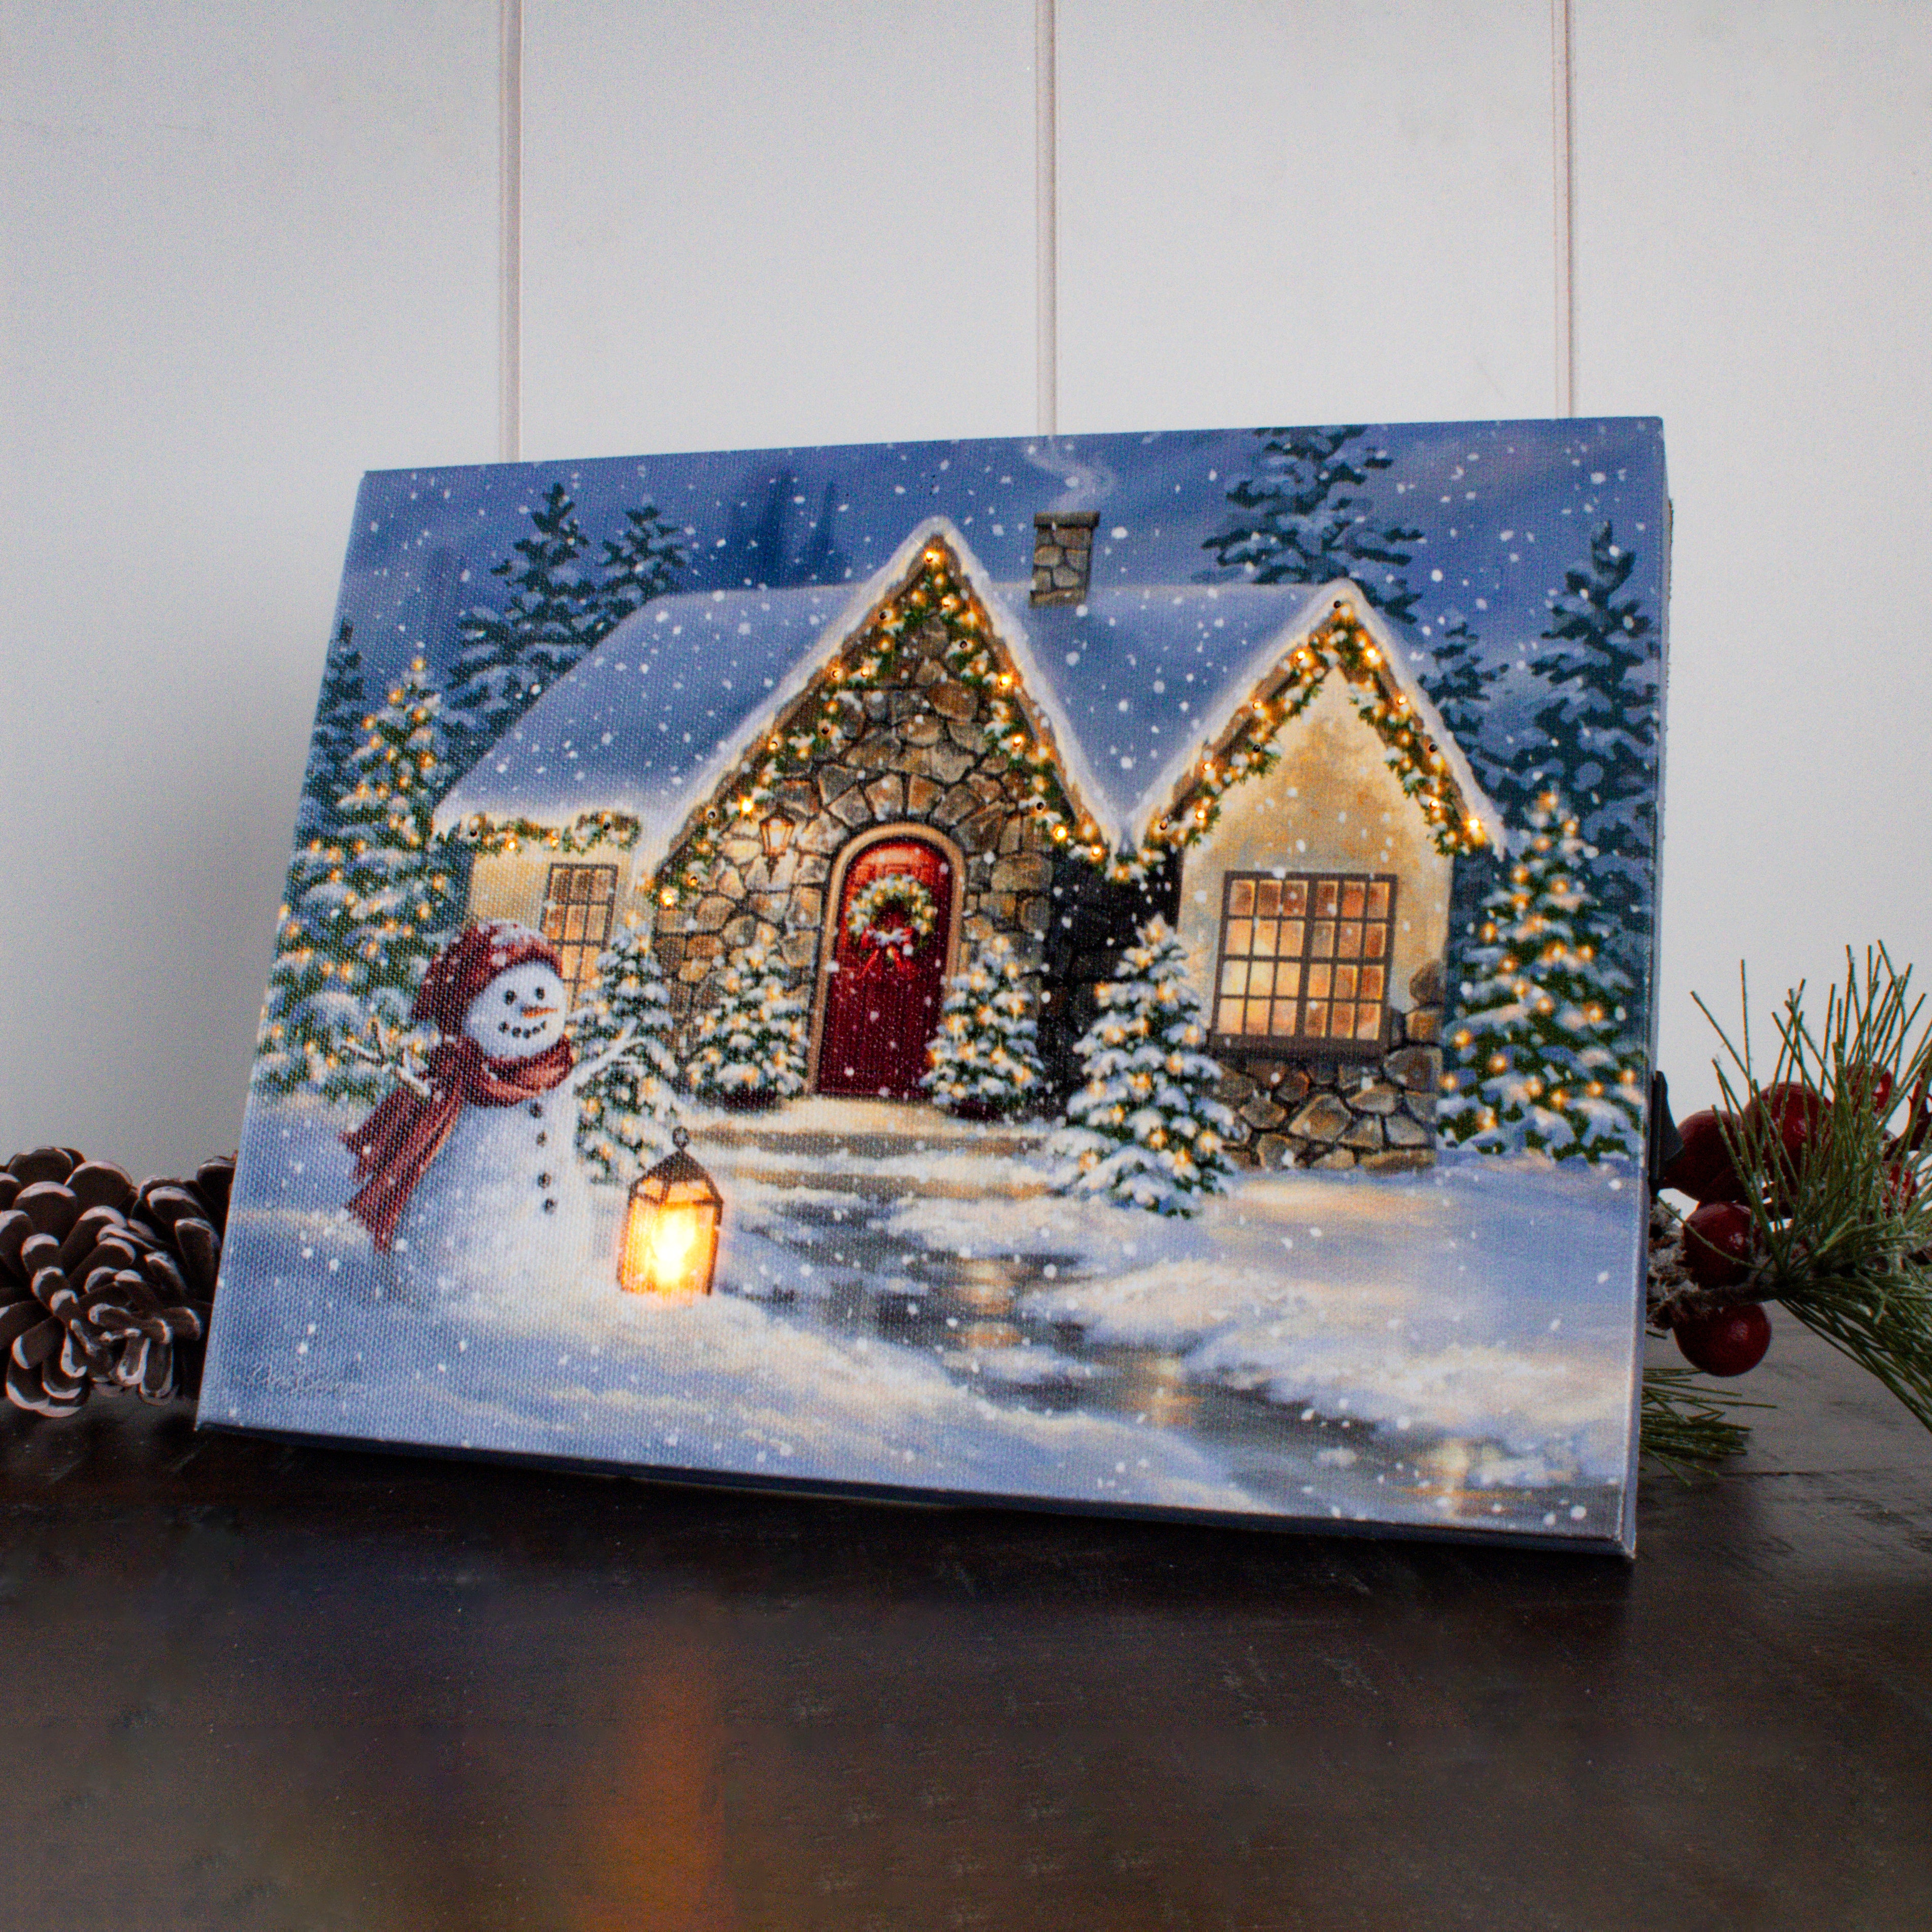  Oak Street Christmas Winter Scenes LED Art 8x6